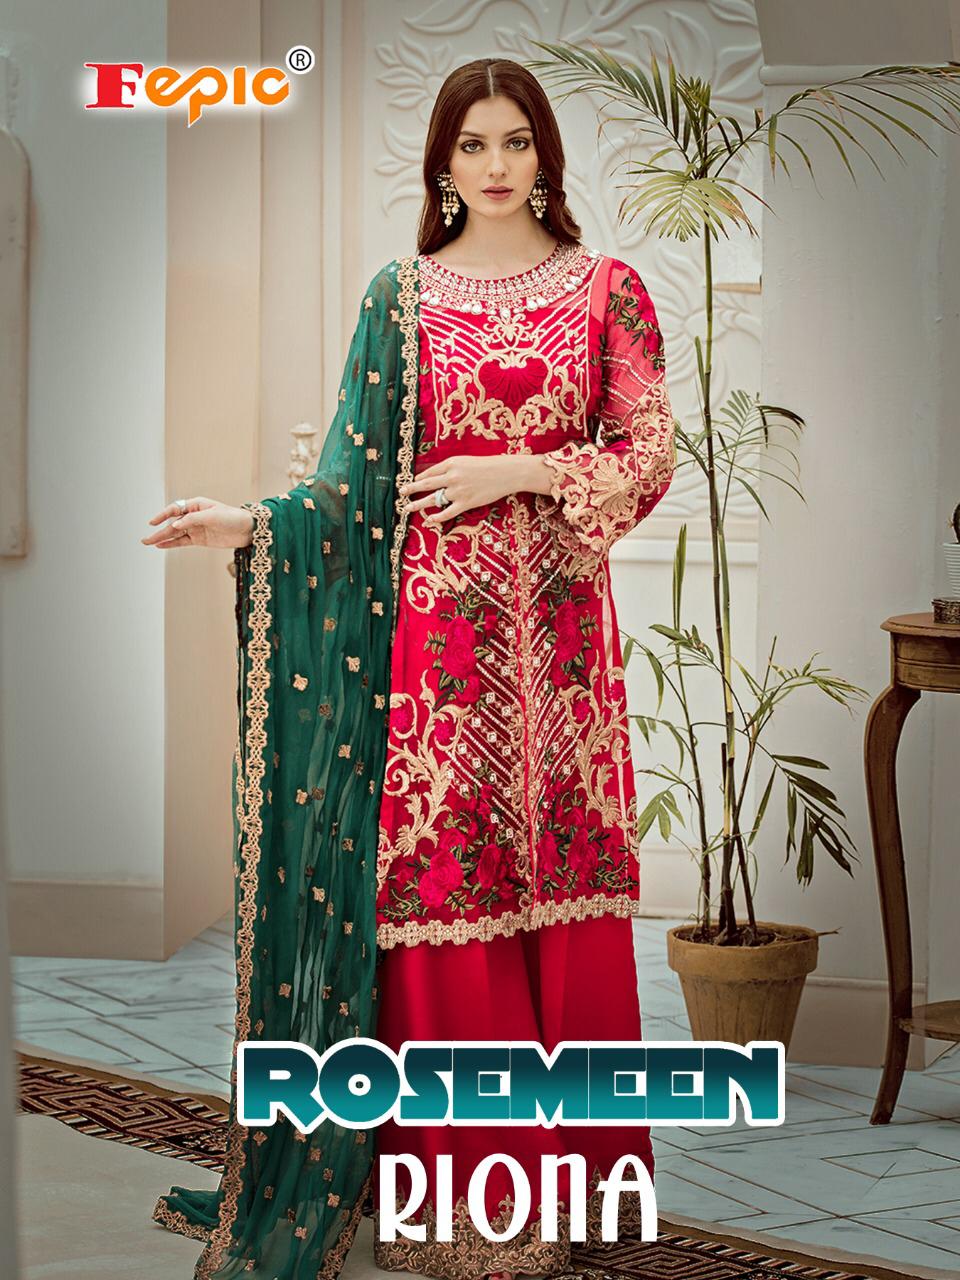 Fepic rosemeen riona premium collection of Salwar suit